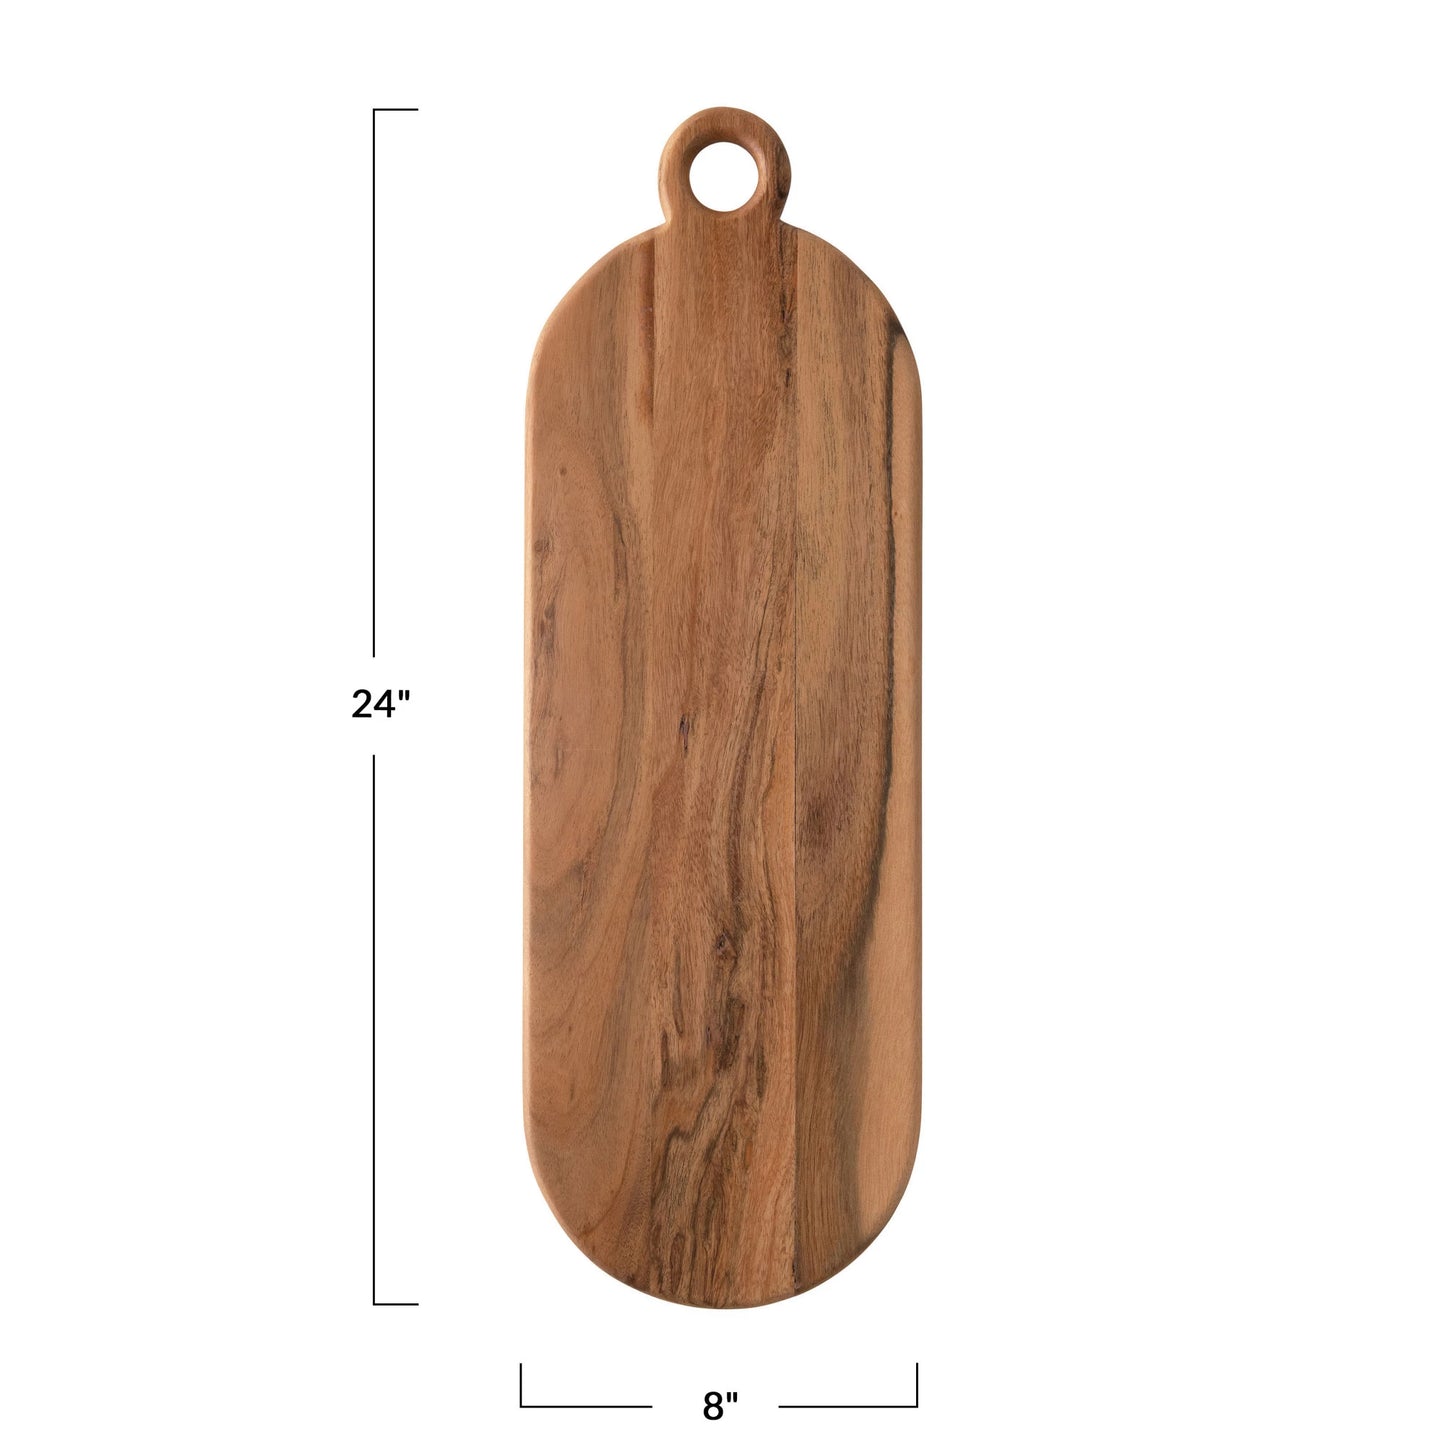 Acacia Wood Cutting Board with Handle